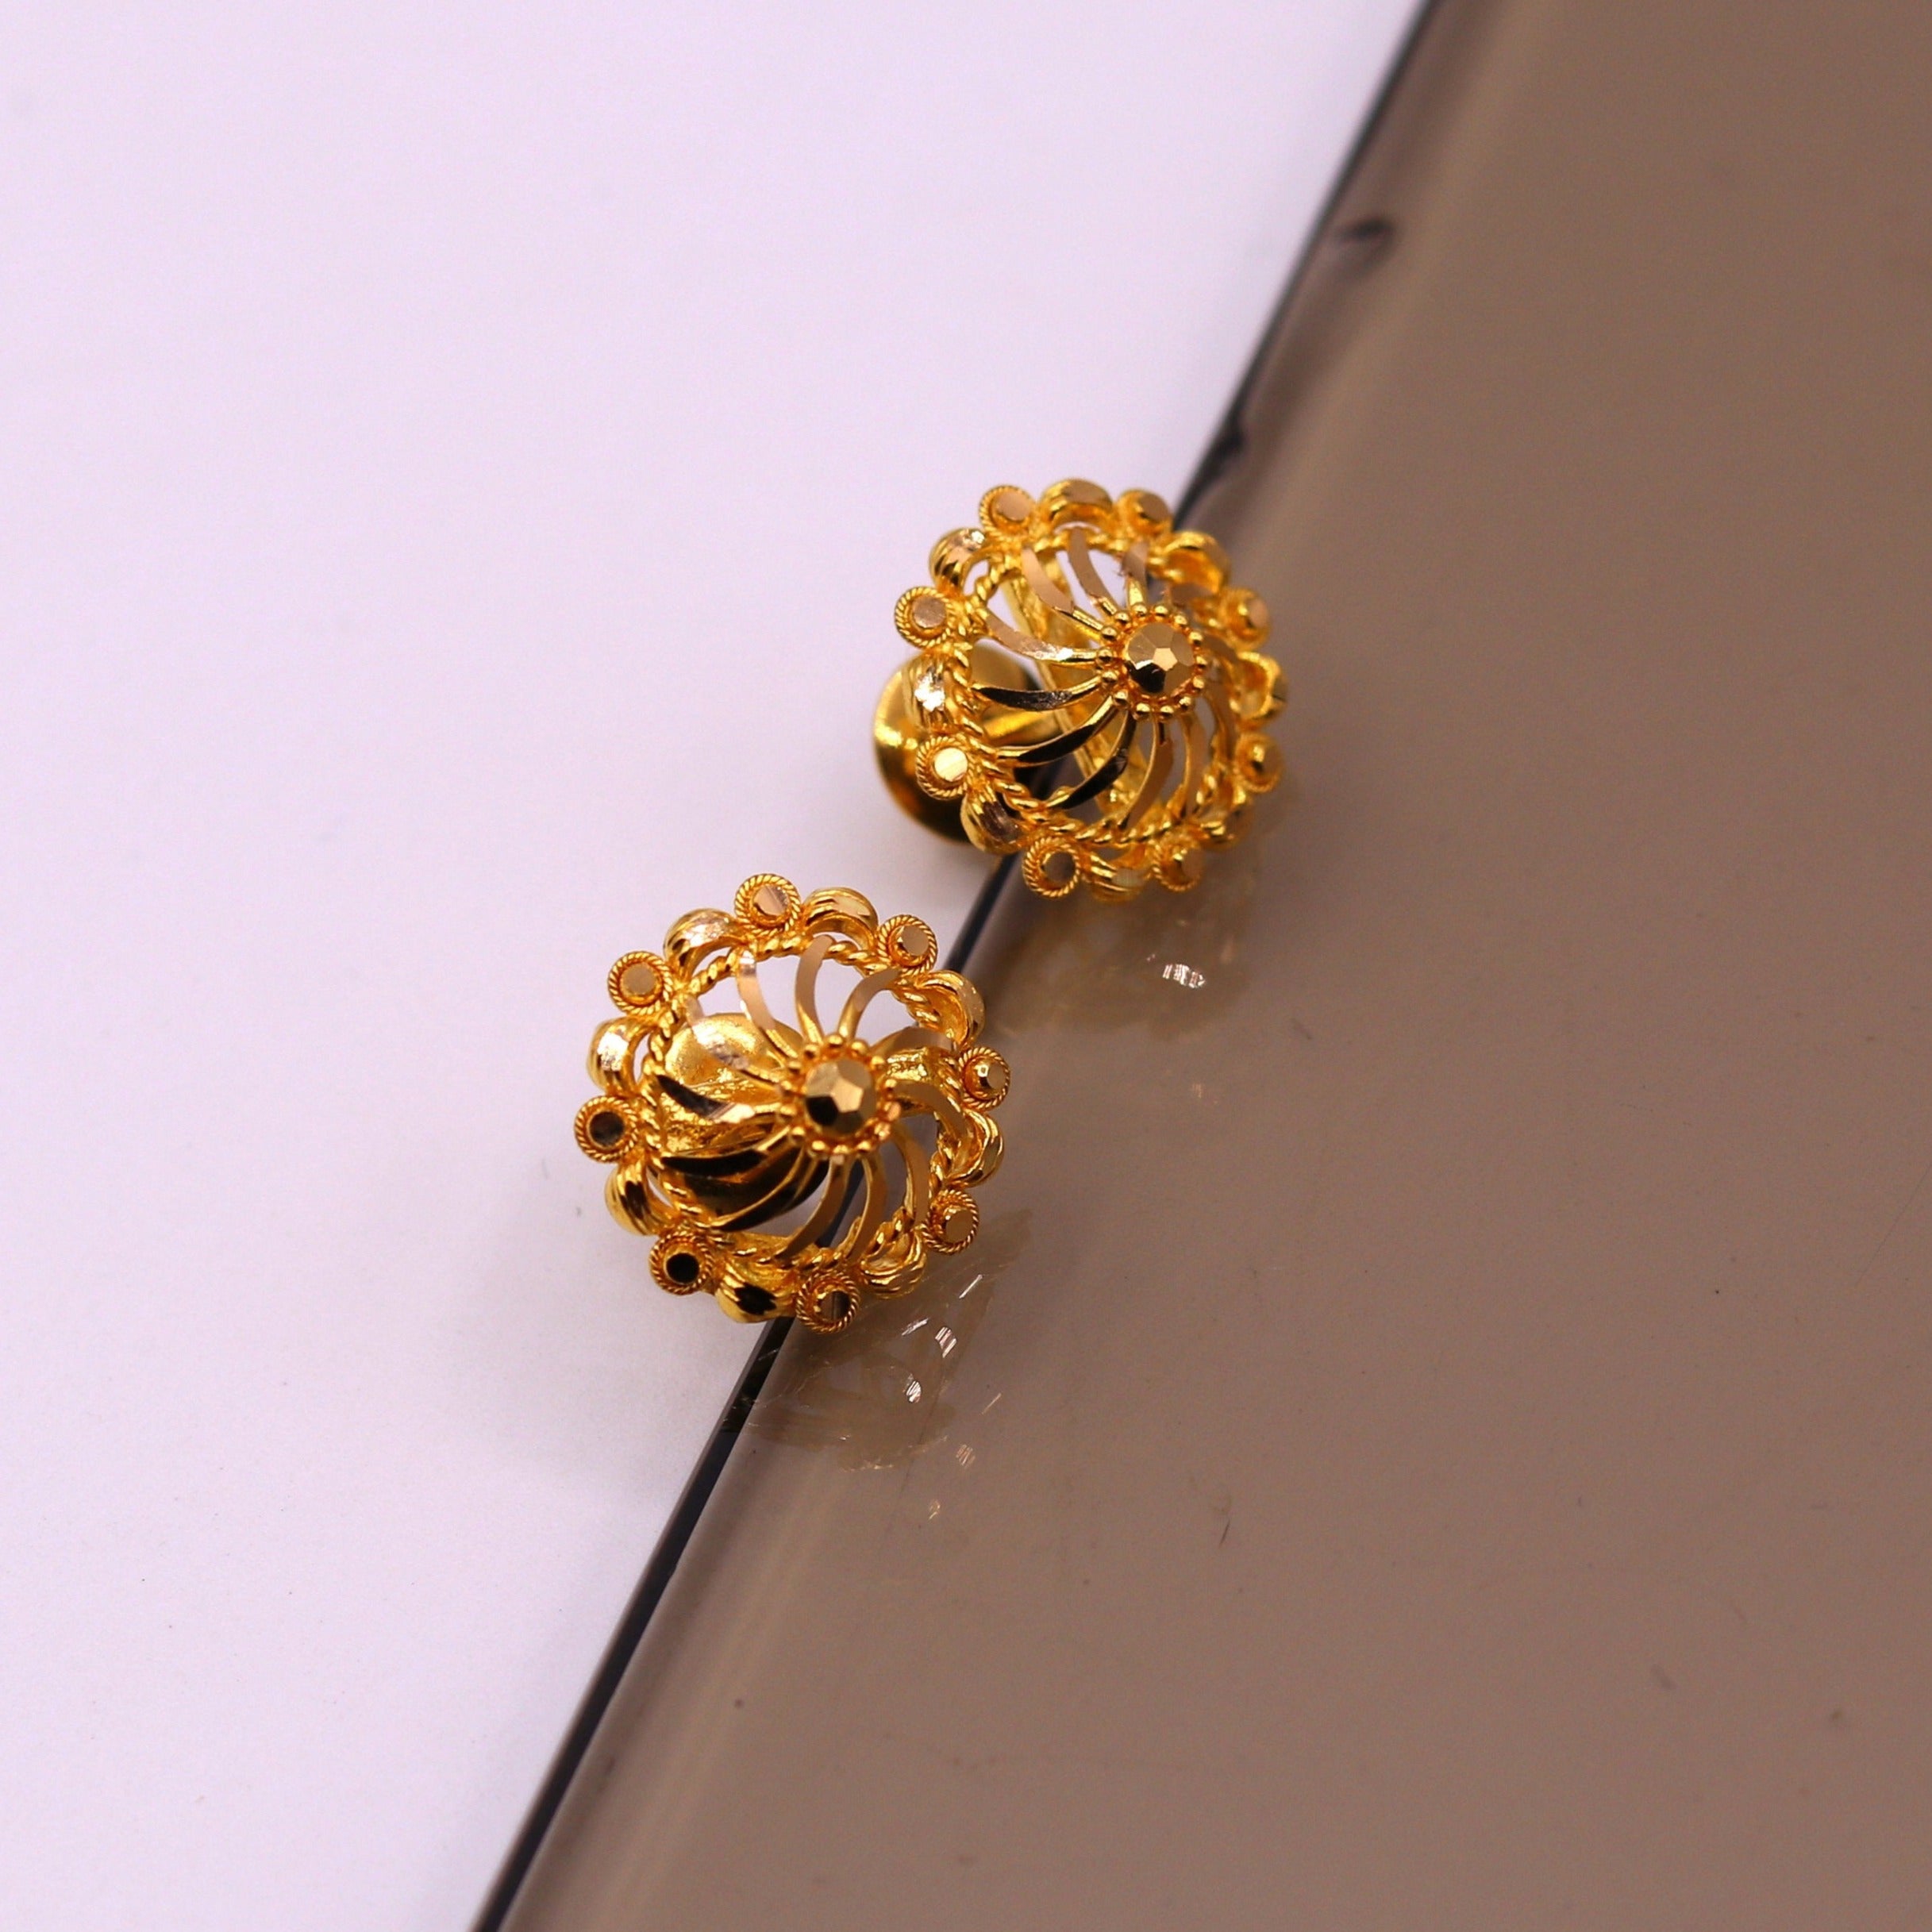 Share 106+ stylish earrings gold super hot